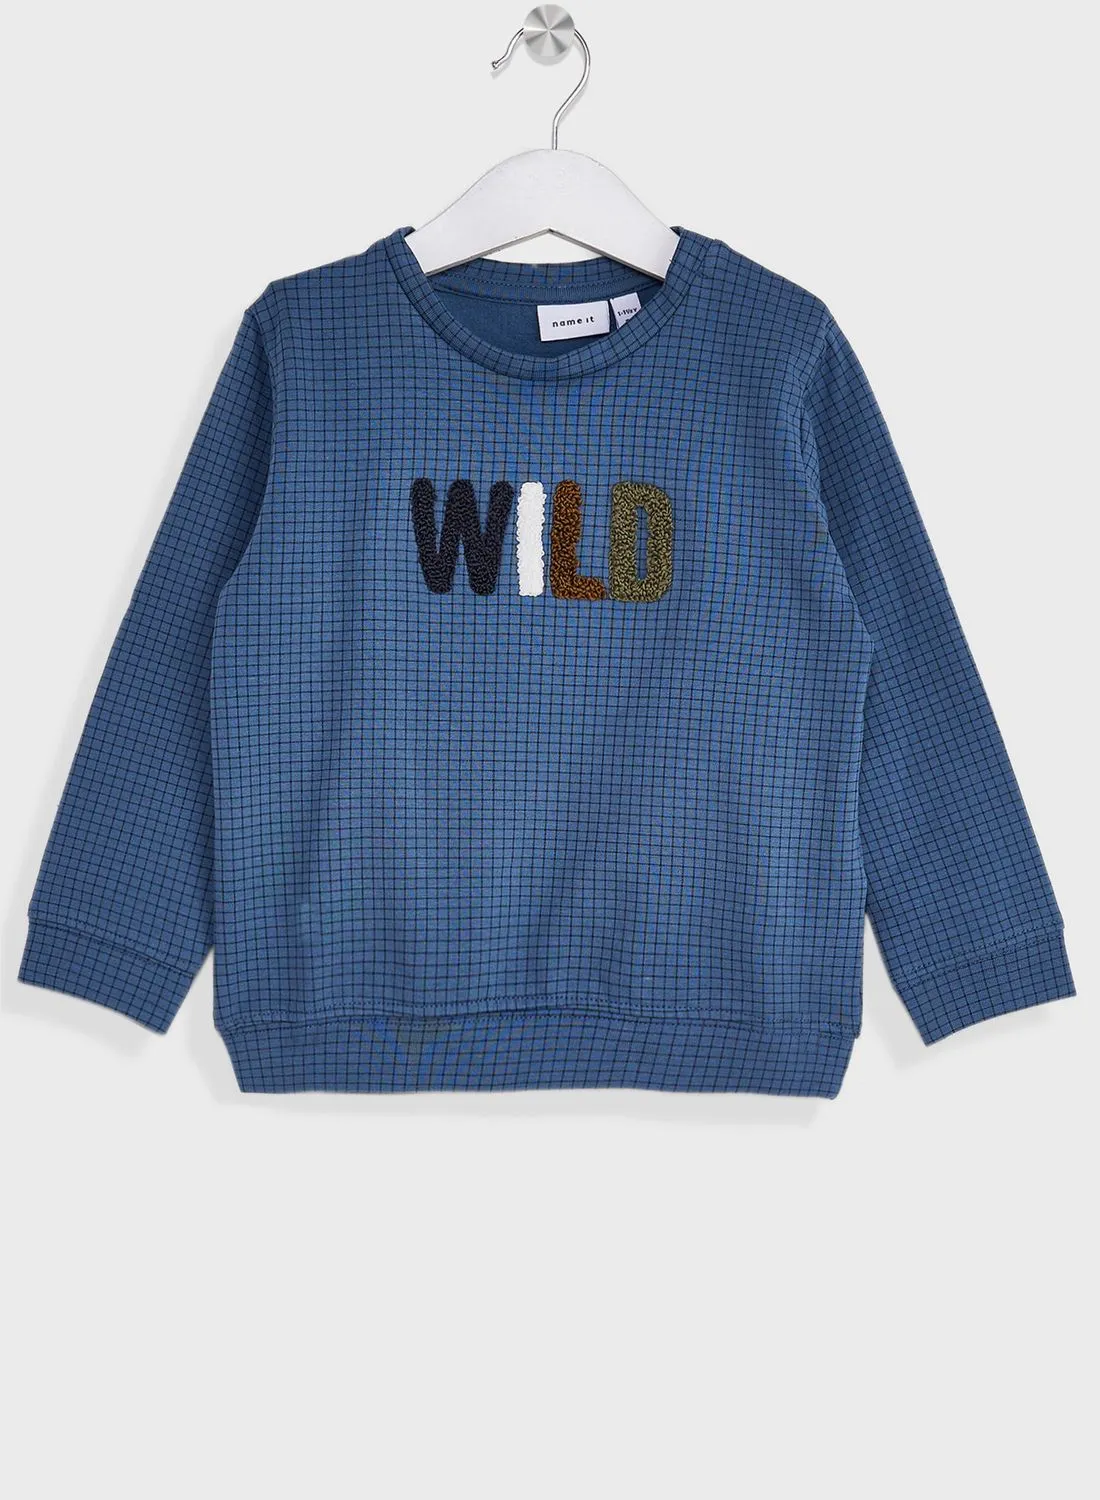 NAME IT Kids Text Print Sweatshirt